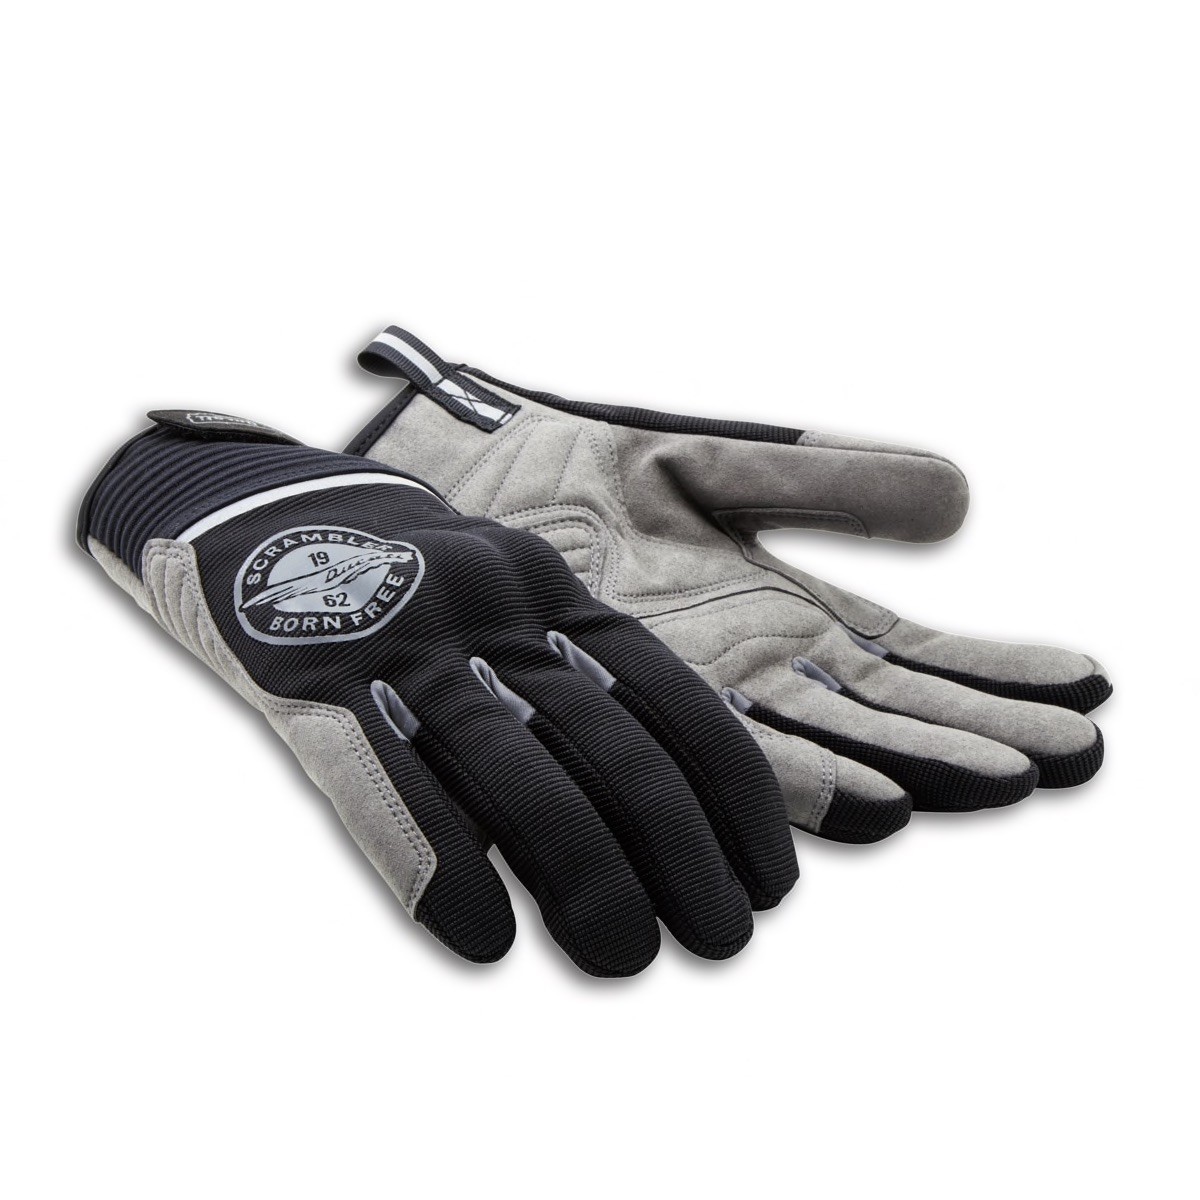 Overland C-3 - Fabric gloves